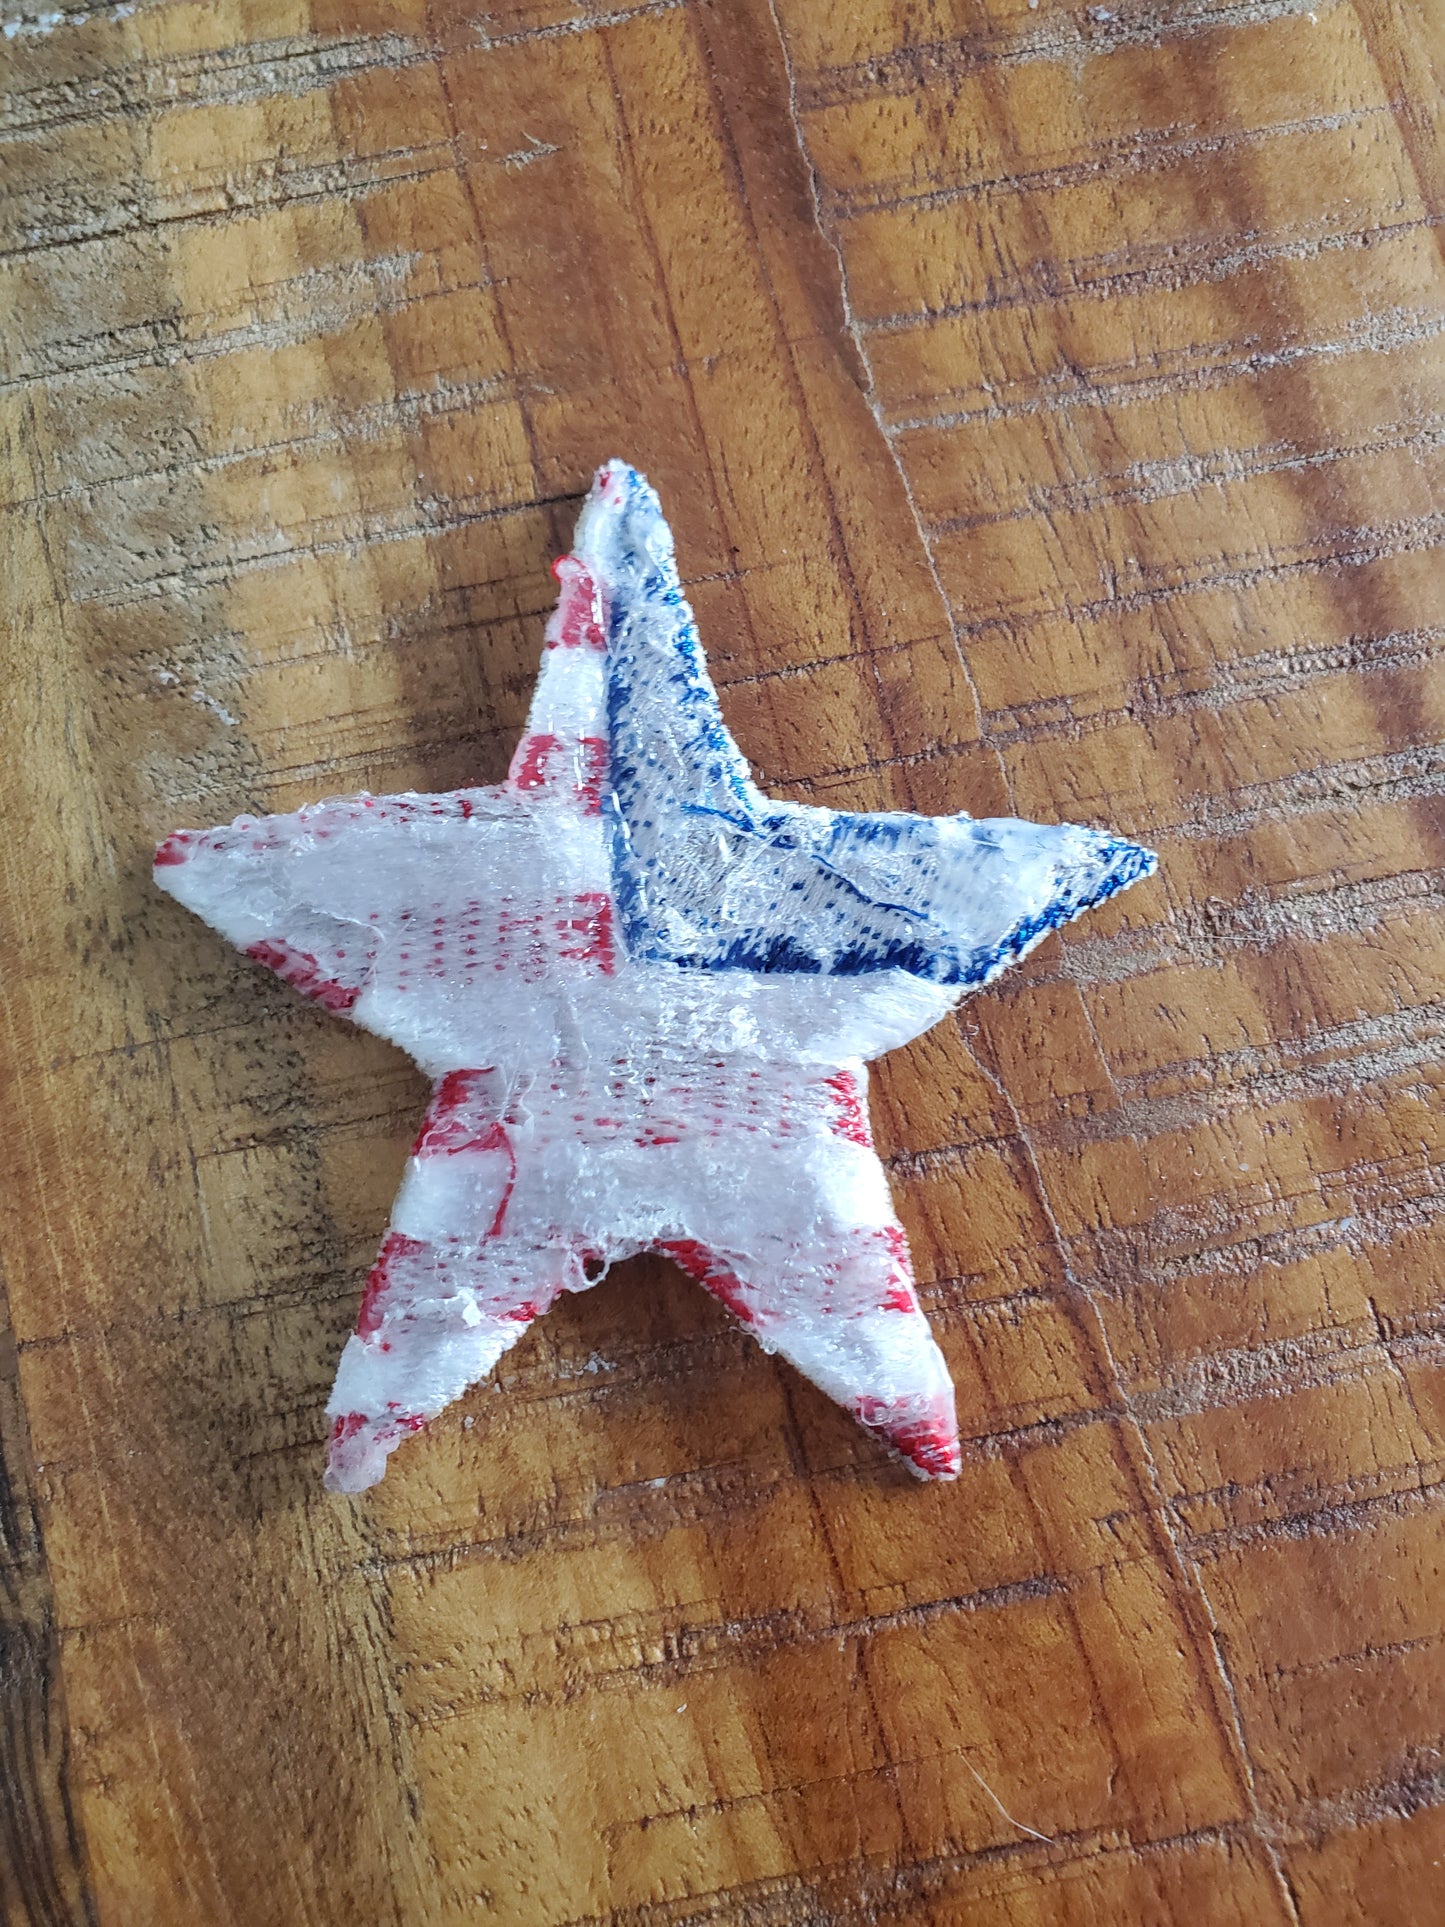 USA Star Shaped Flag Patch